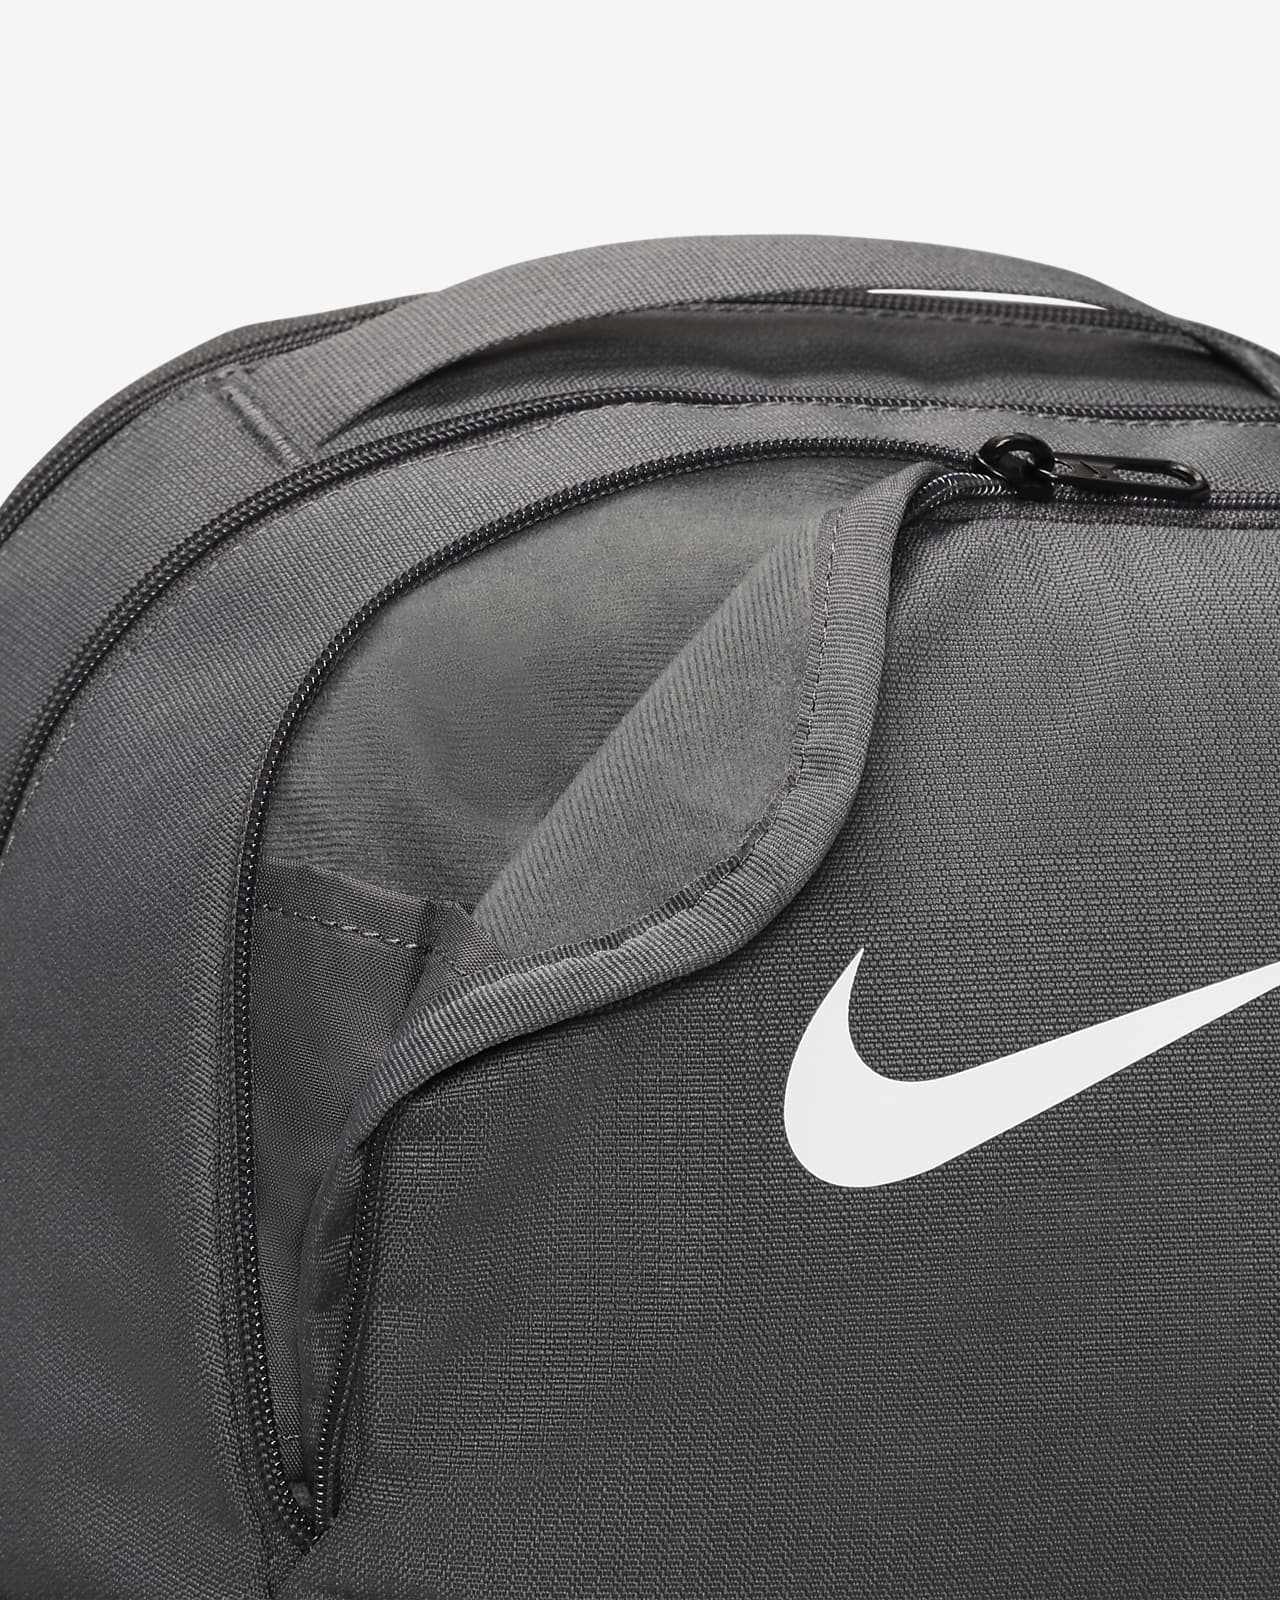 Custom Nike Brasilia Medium Backpack - Design Online